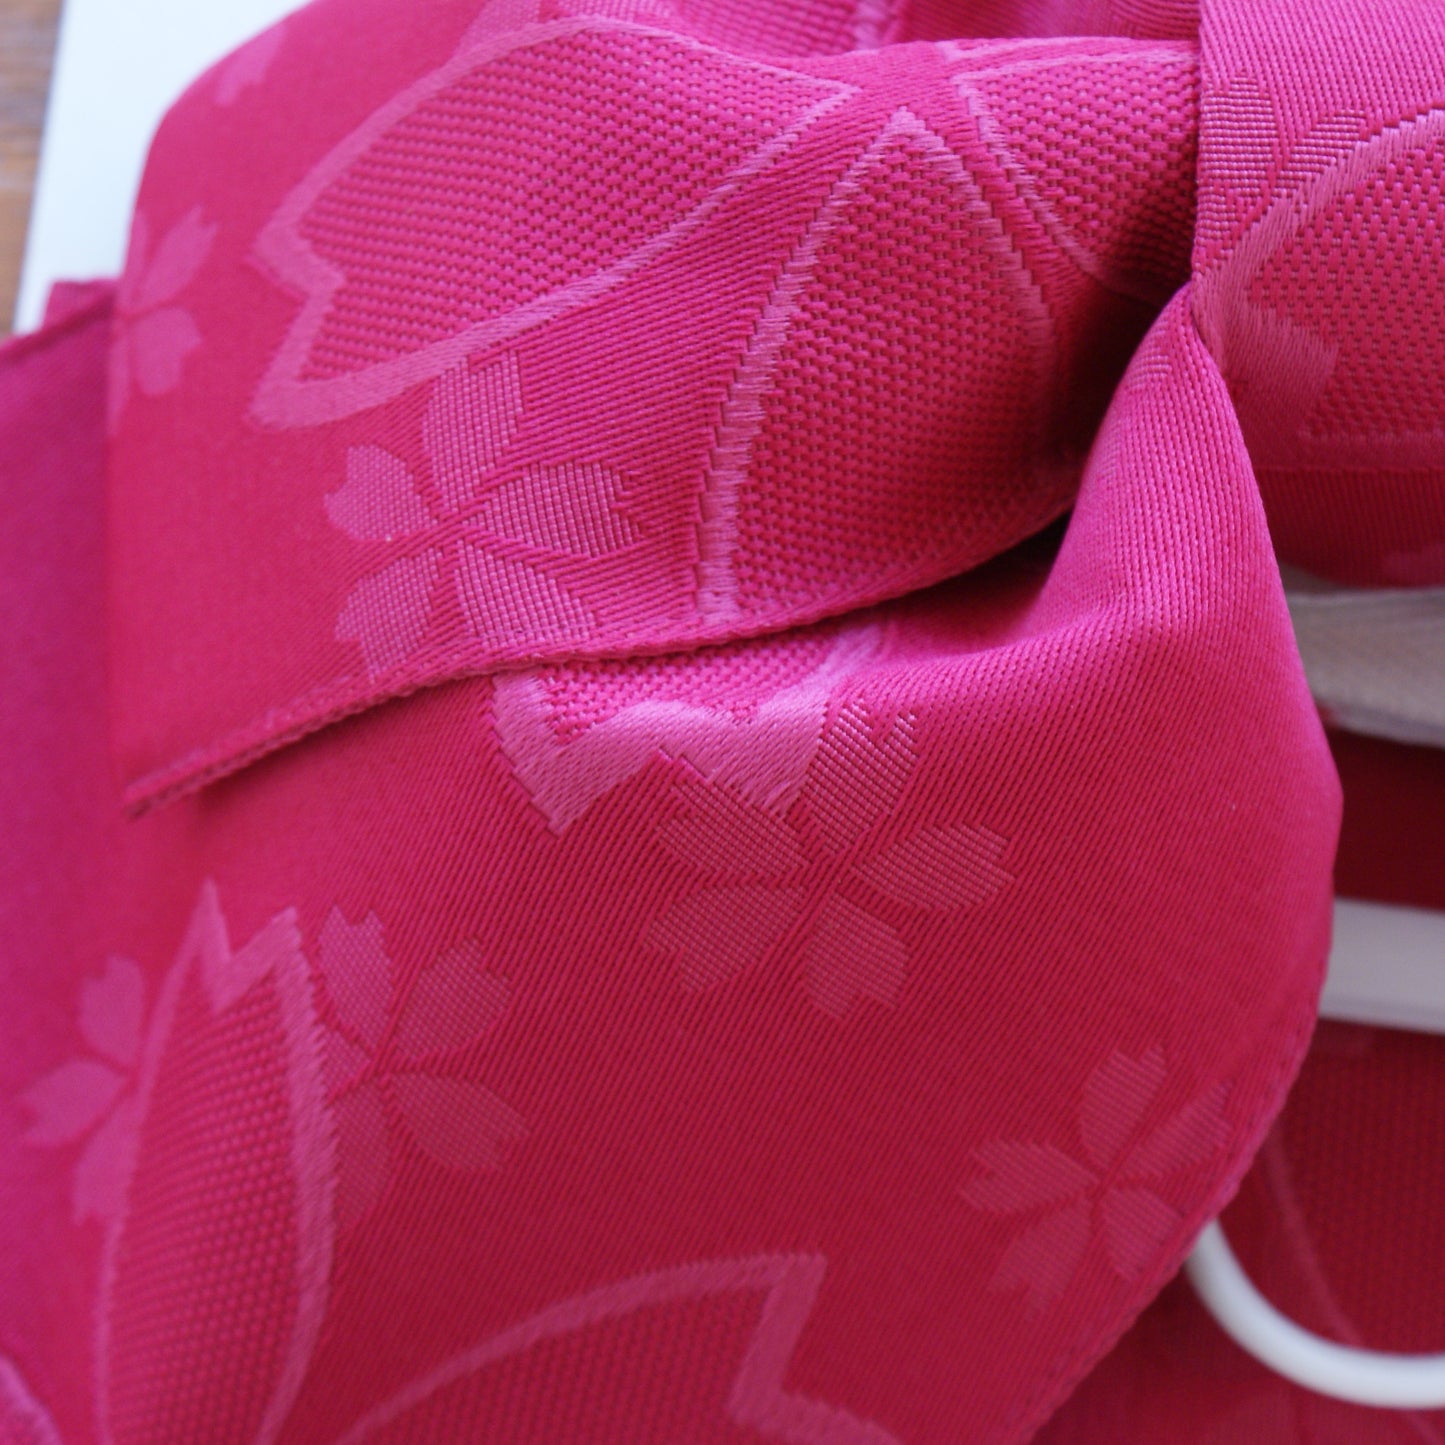 Pre-Tied Obi Belt - Cherry Blossom Hot Pink